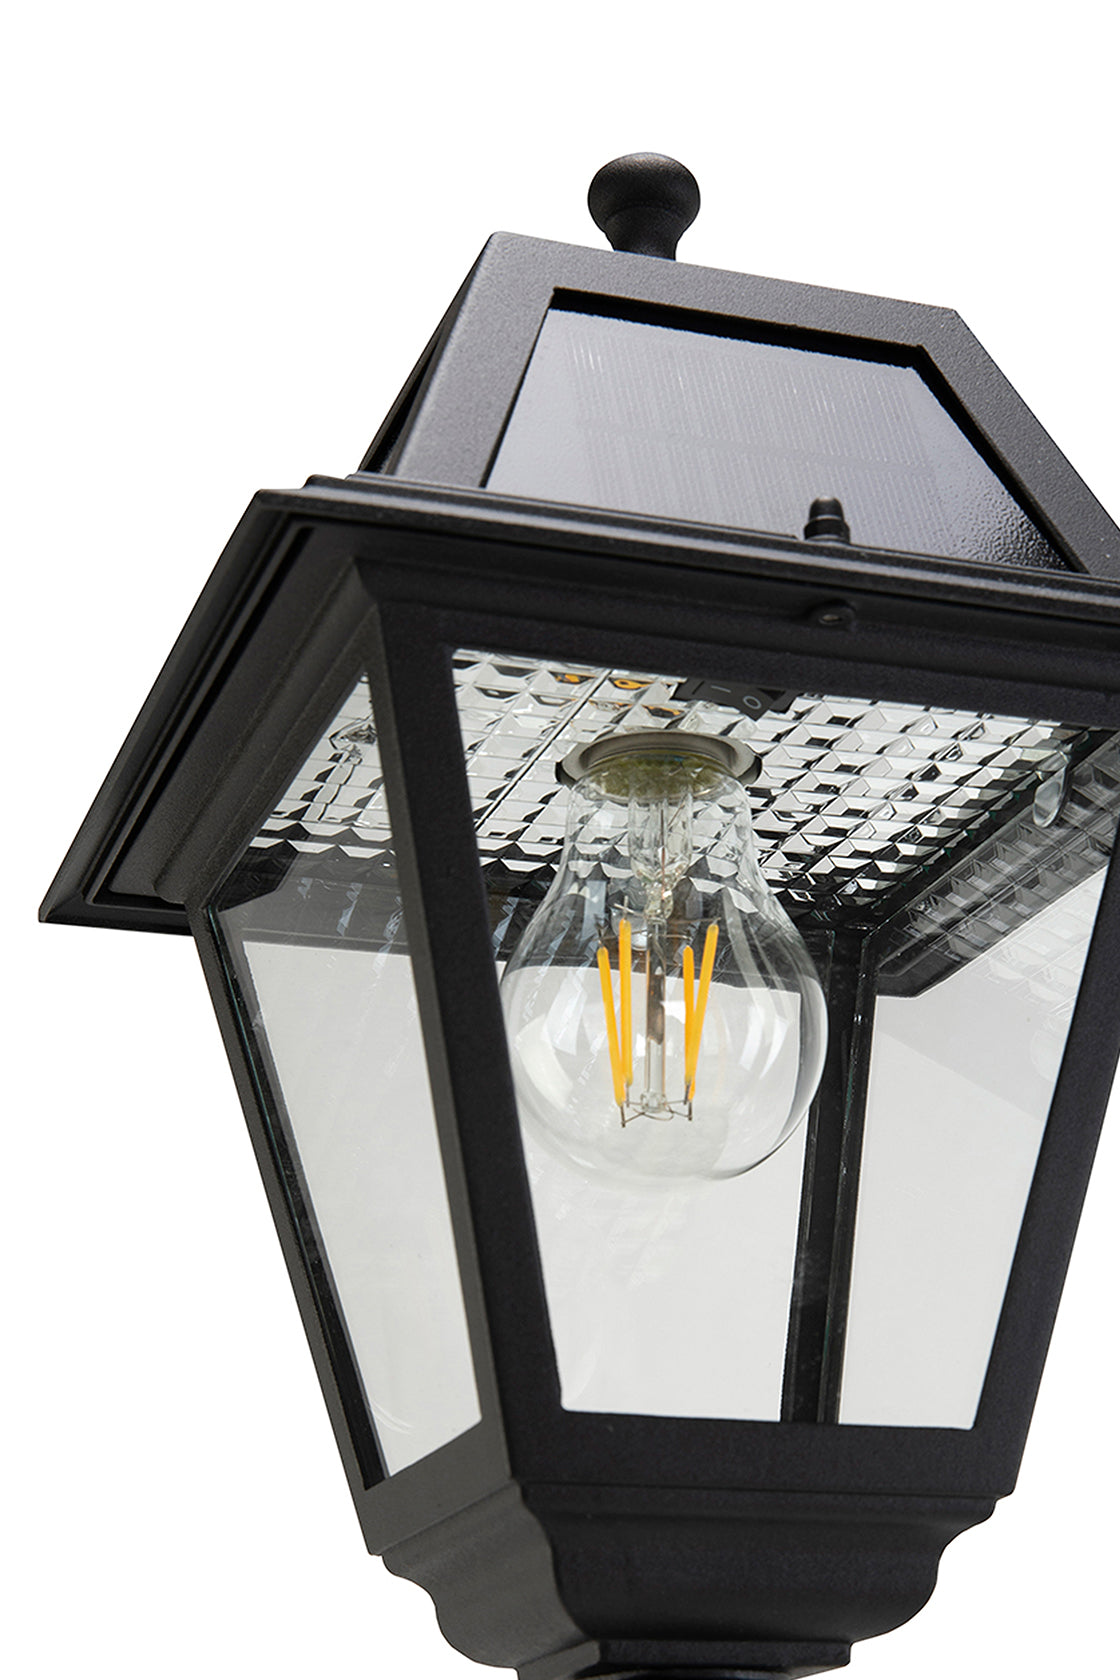 LUTEC- One-Trapezoid-Head Die-Cast Aluminum LED Outdoor Solar Street Light (Only Head), Dusk to Dawn. Black(Bulbs Included)